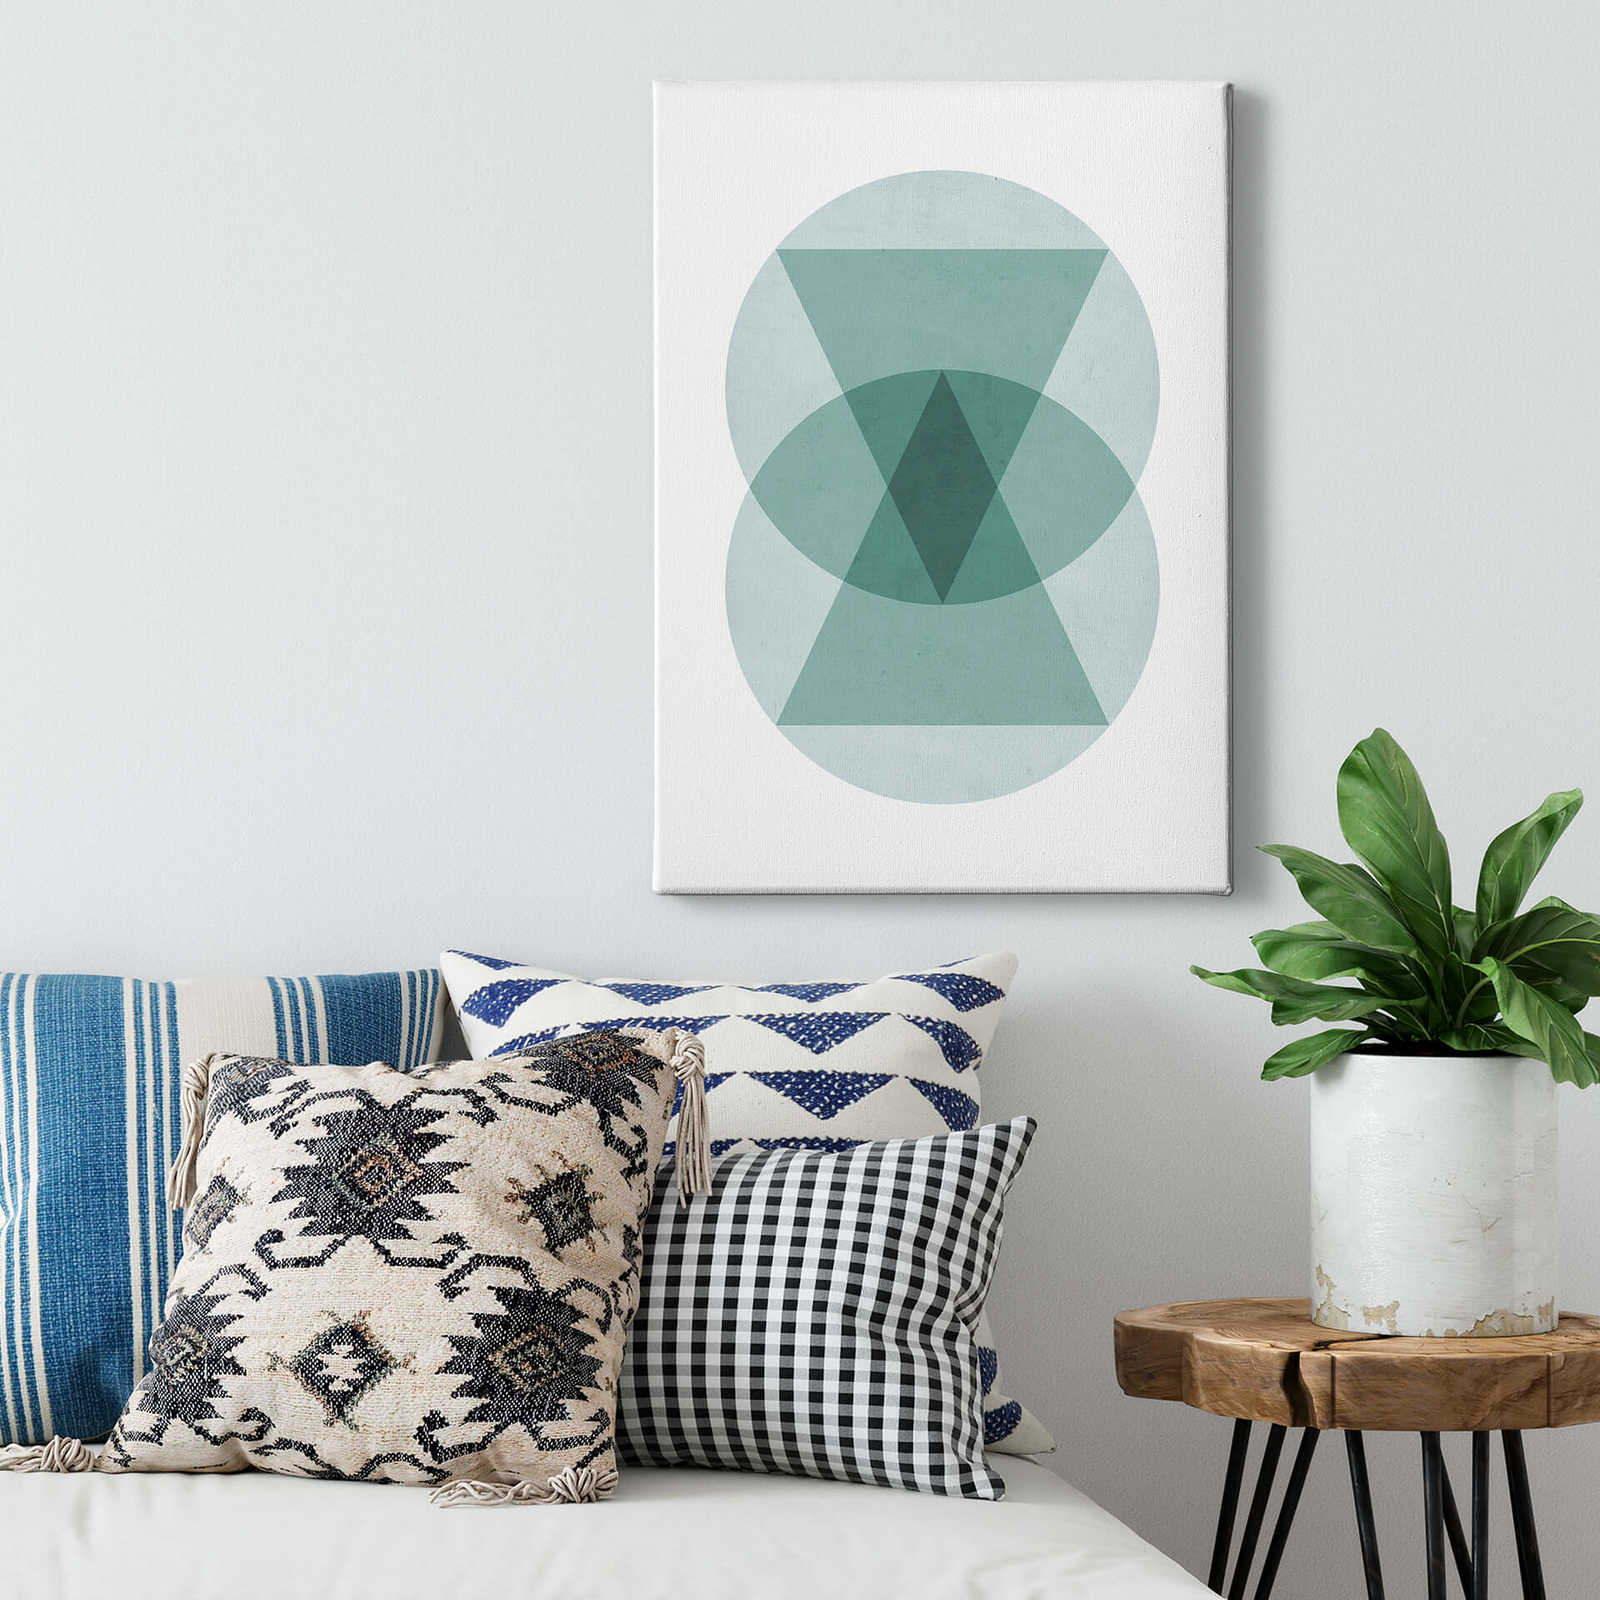             Canvas schilderij geometrisch patroon cirkels driehoeken - 0,50 m x 0,70 m
        